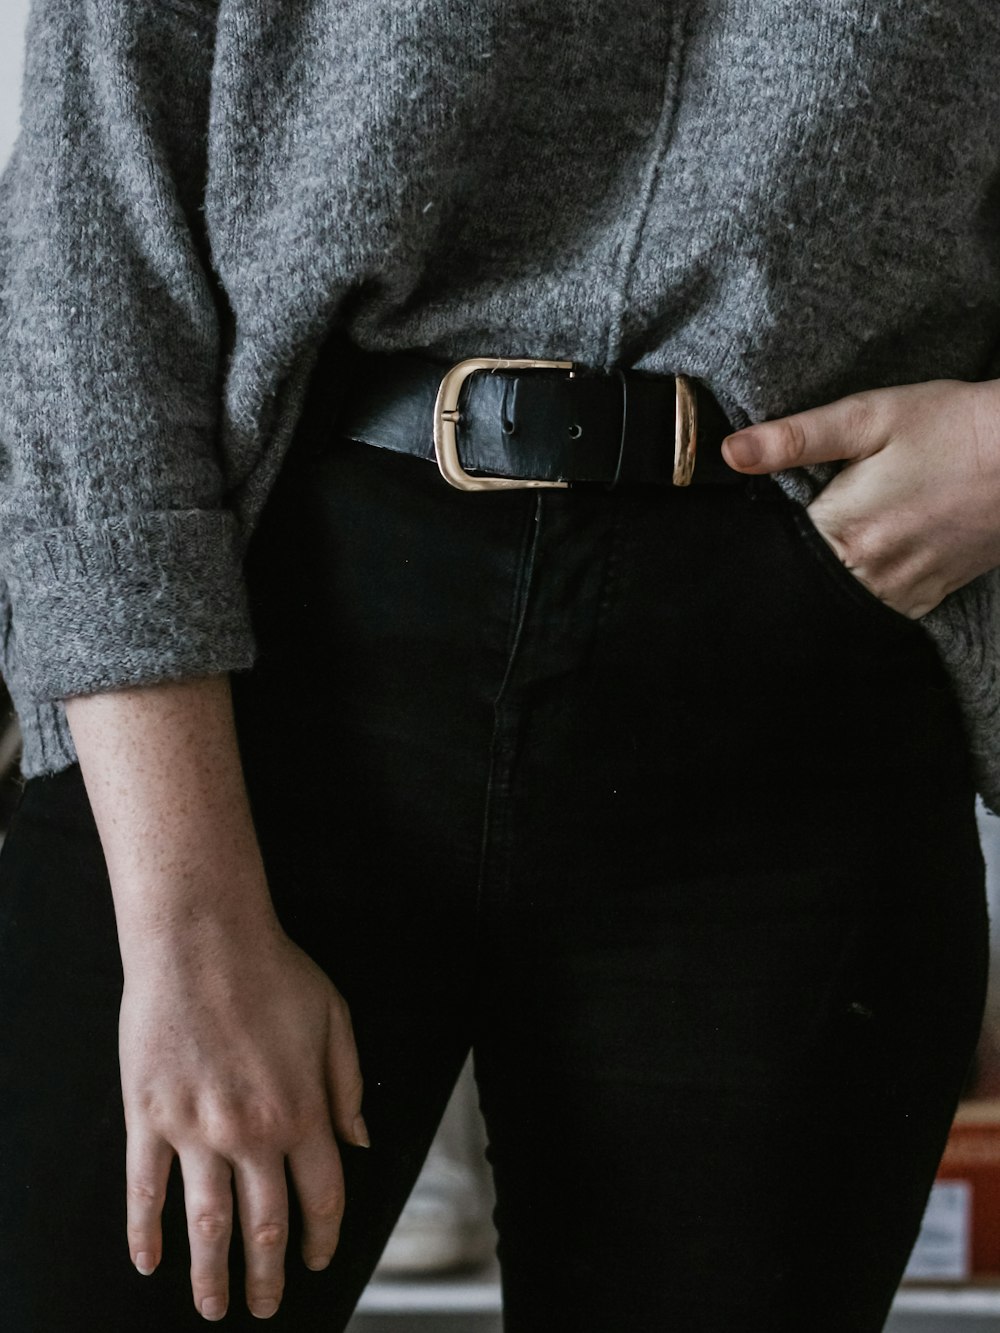 person wearing black leather belt